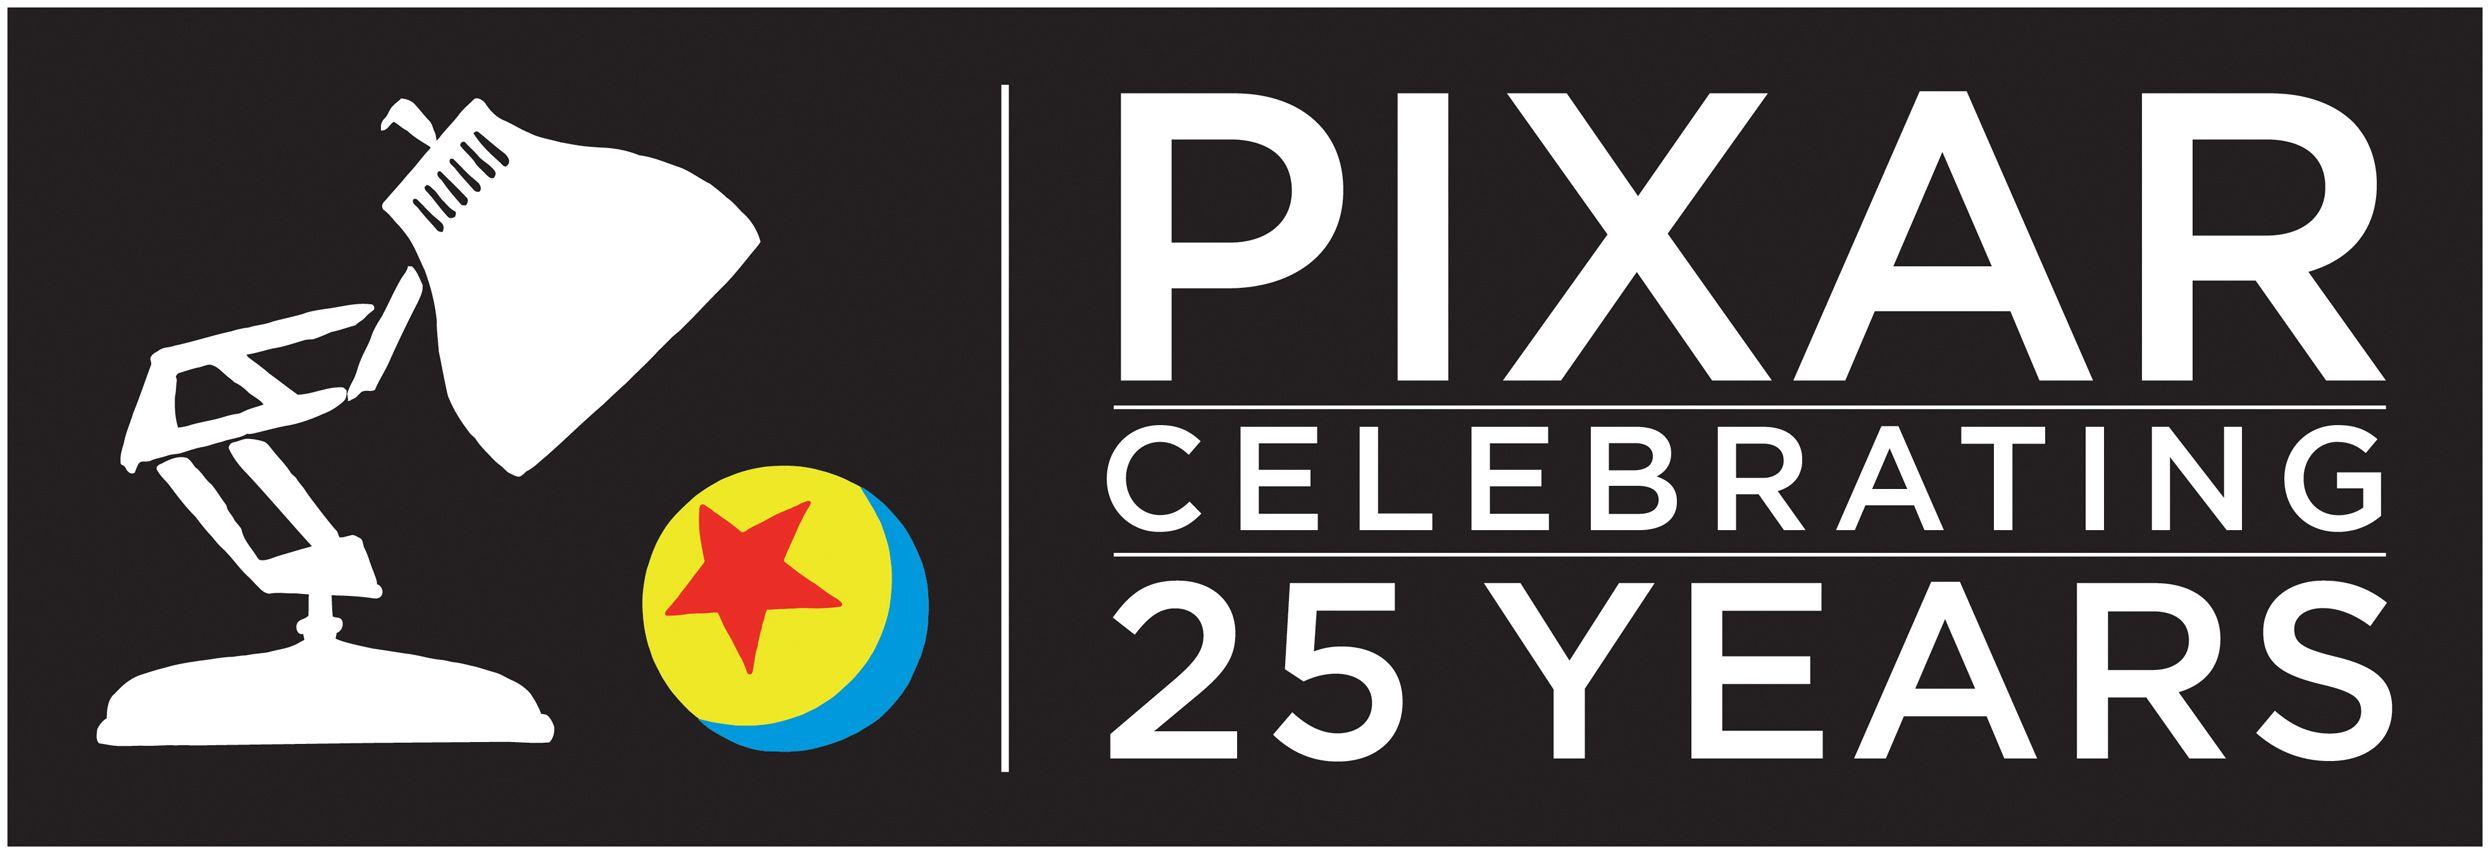 Pixar Ball Logo - First Look: Pixar 25th Anniversary Logo